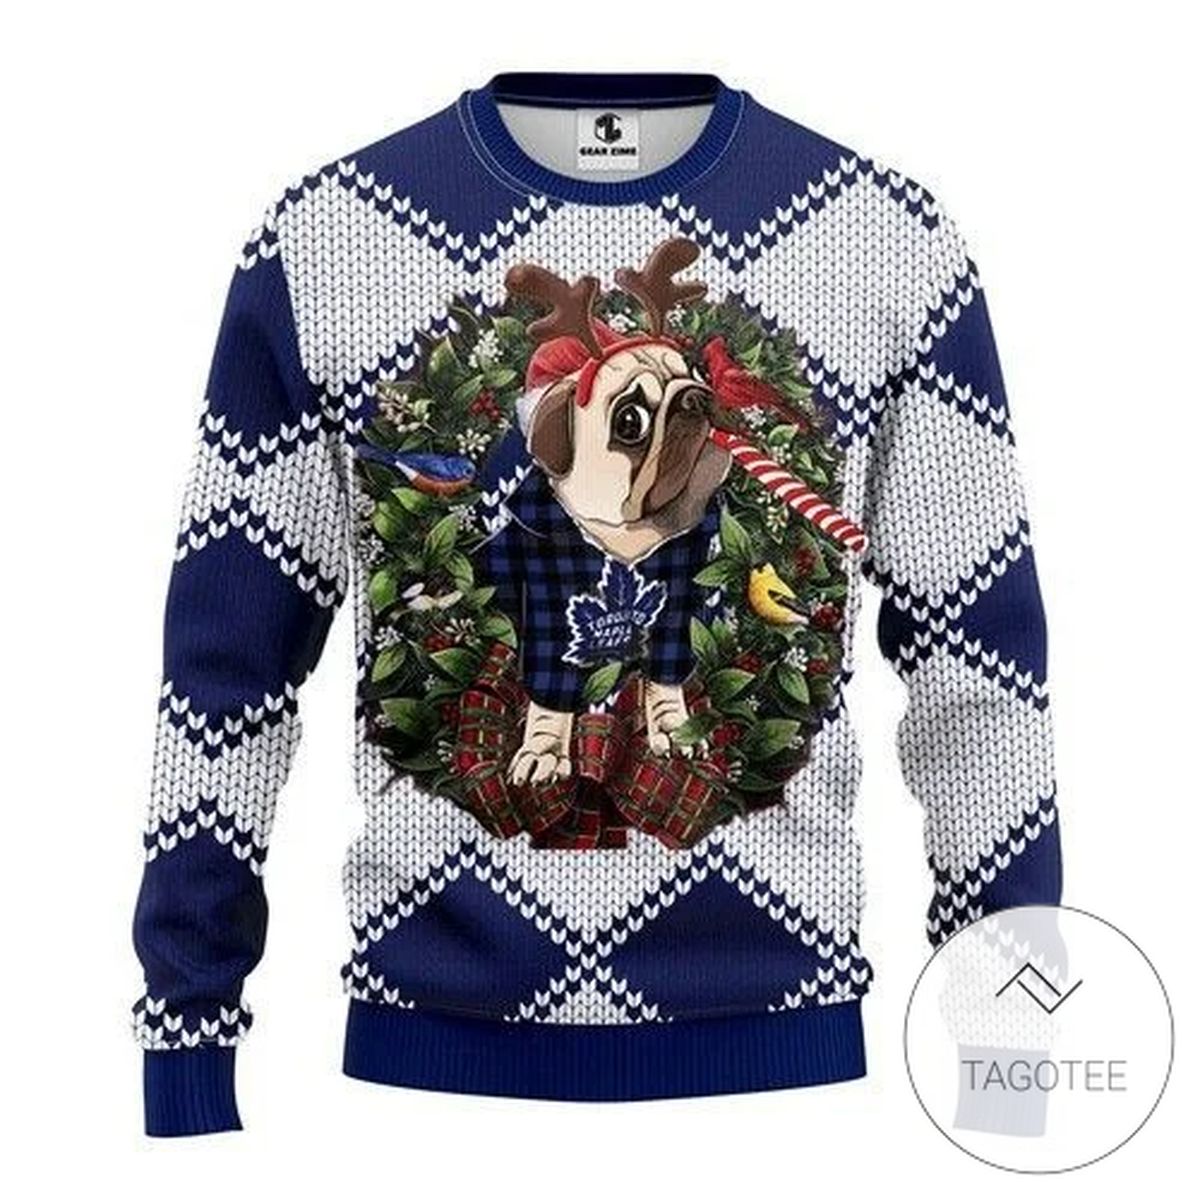 Nhl Toronto Maple Leafs Pug Dog Sweatshirt Knitted Ugly Christmas Sweater